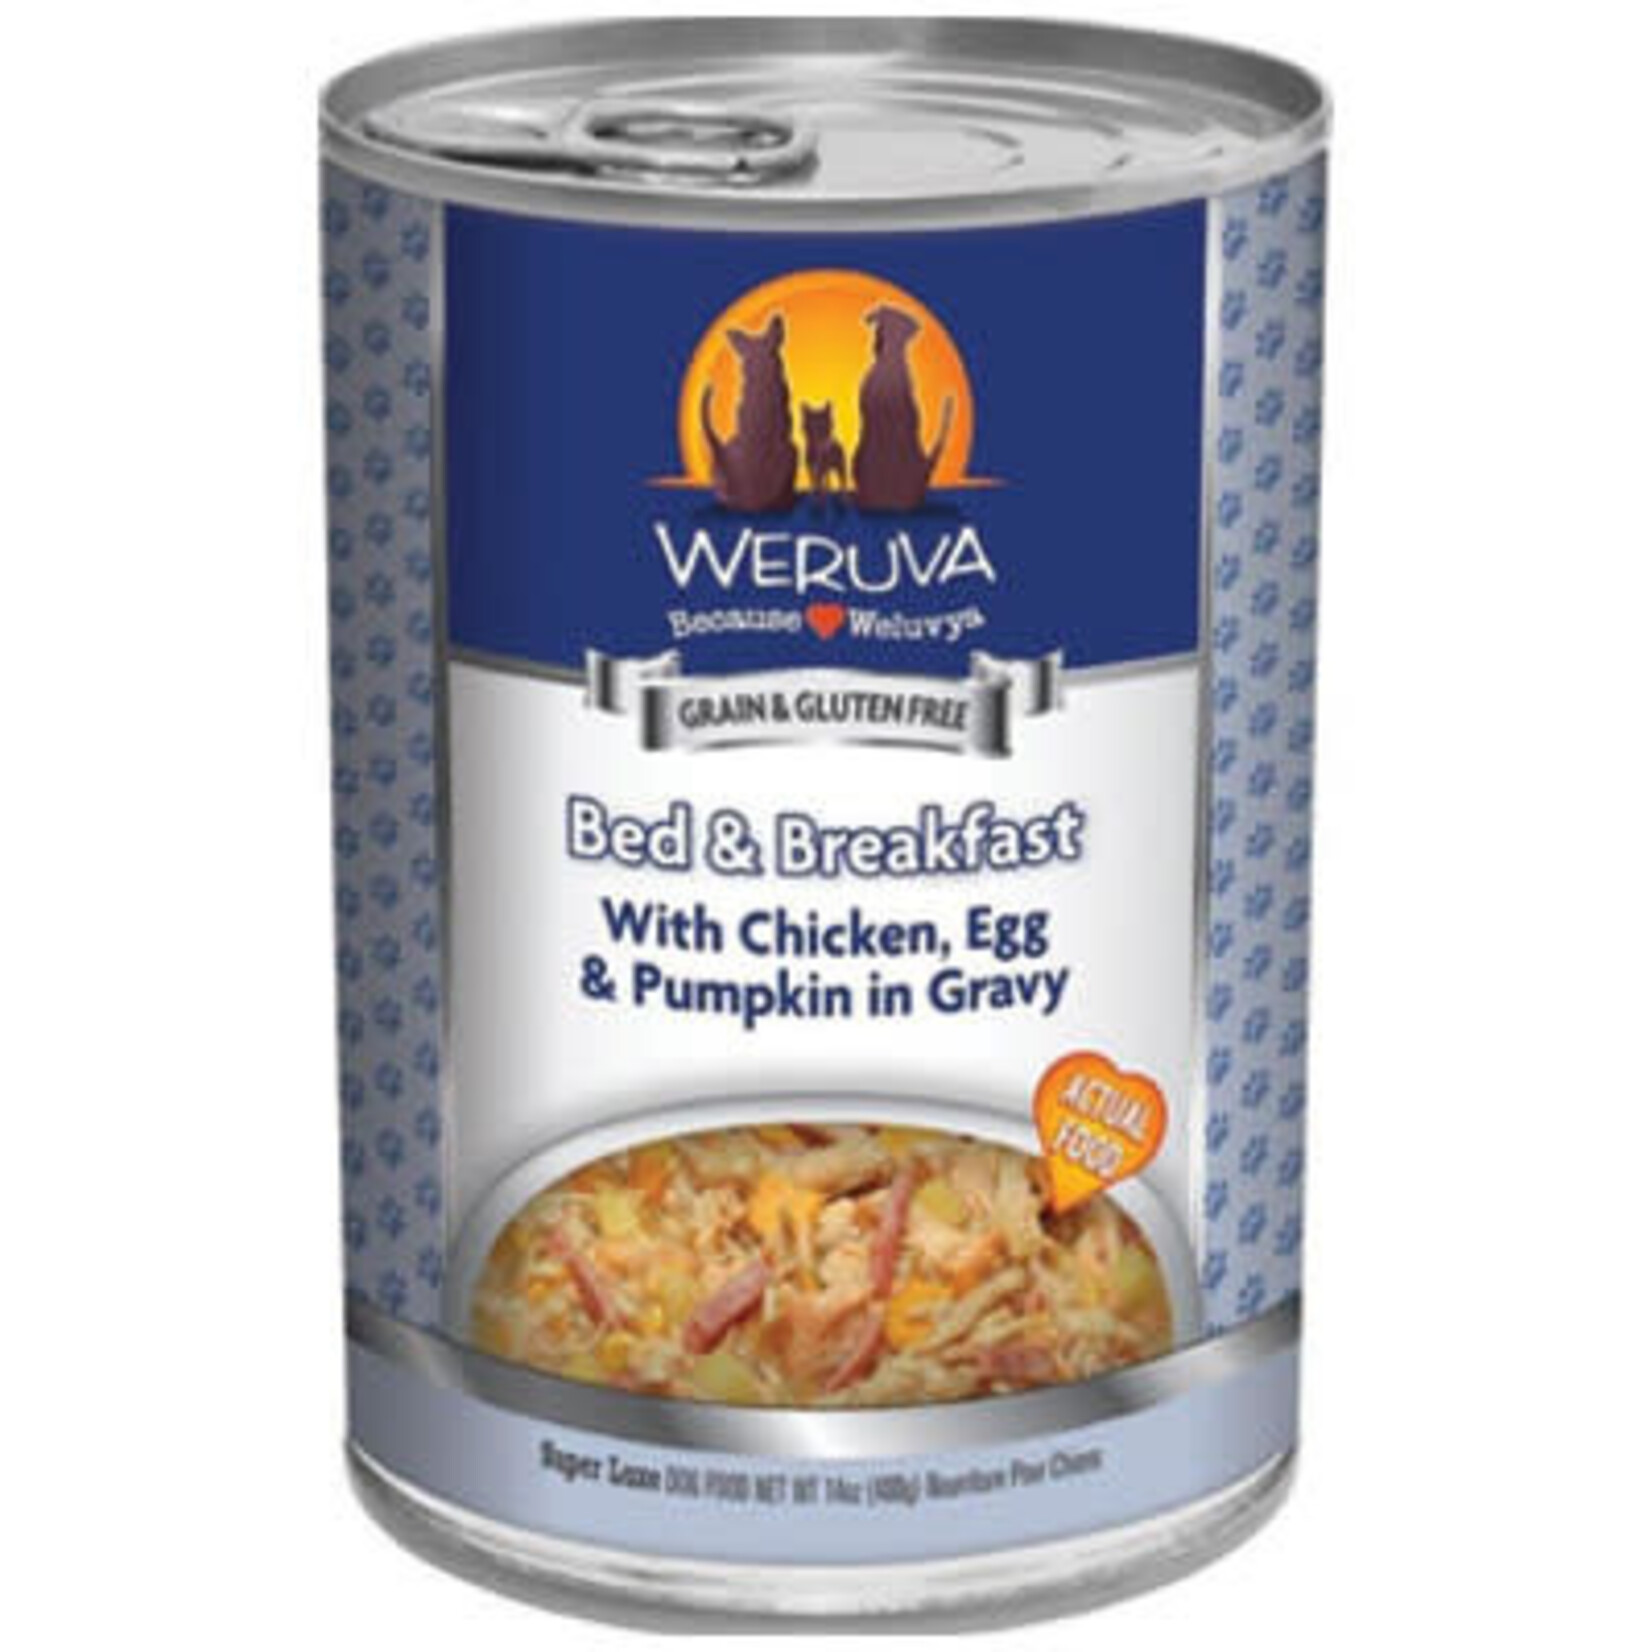 Weruva Weruva 14oz Canned Dog Food